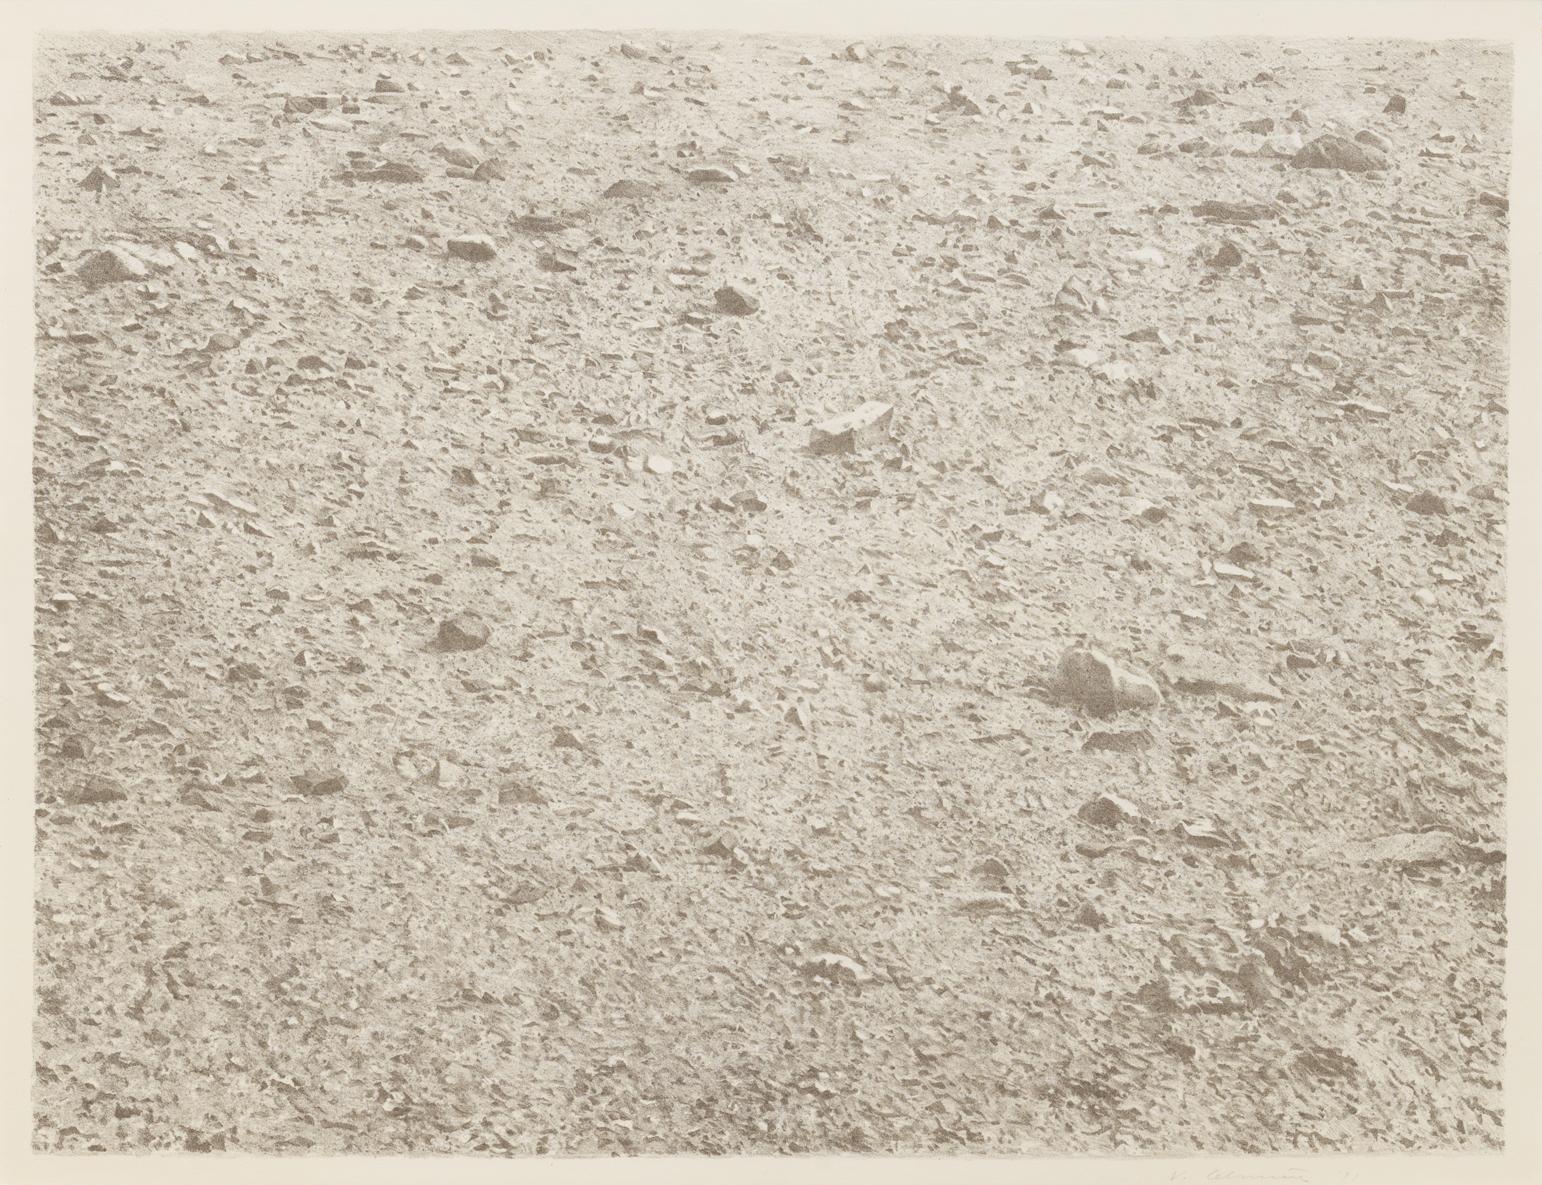 Vija Celmins Landscape Print – Ohne Titel (Große Wüste)